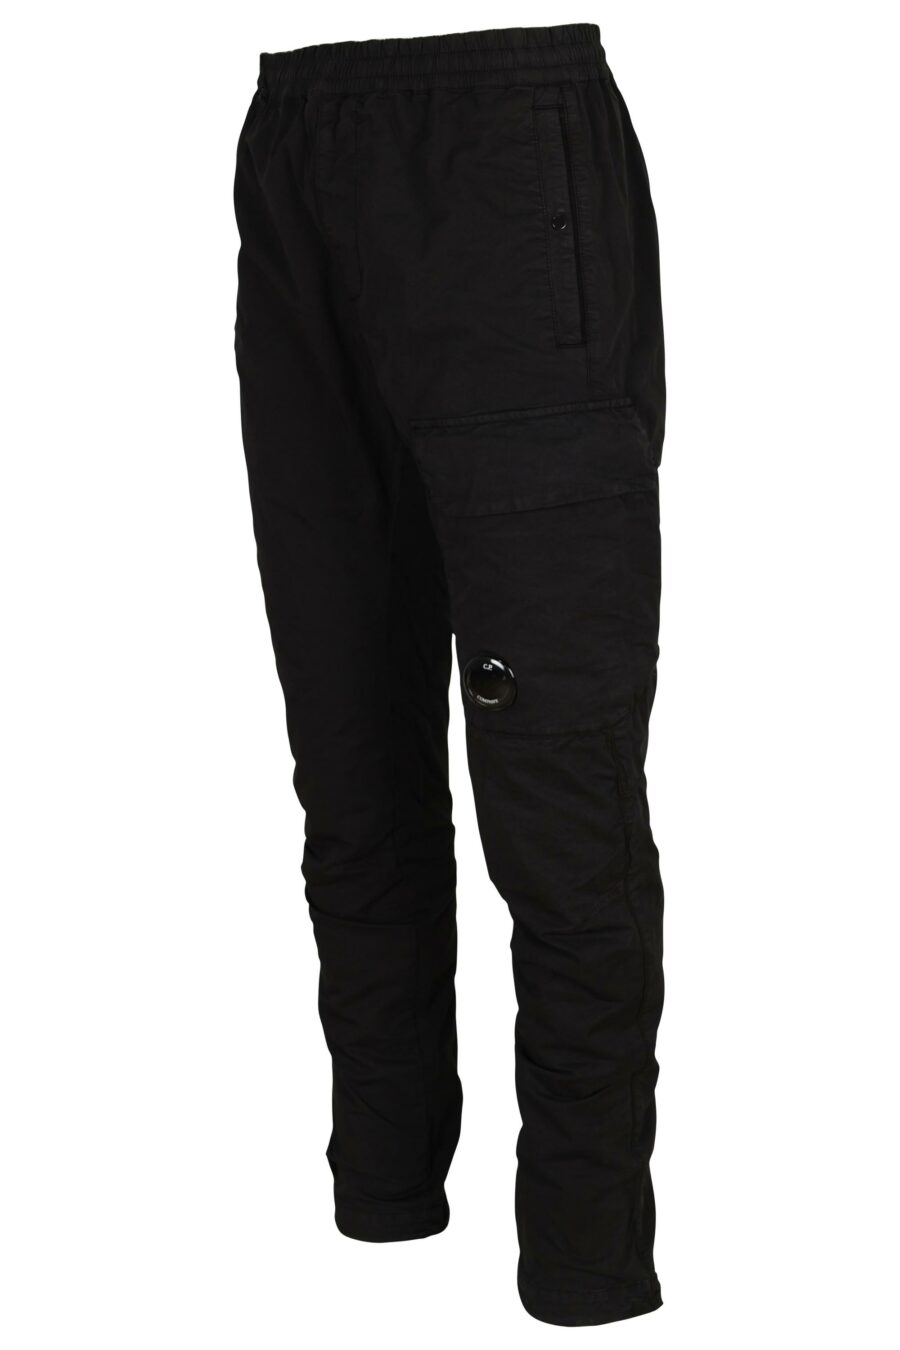 Pantalon cargo noir avec mini-logo en forme d'objectif - 7620943805123 1